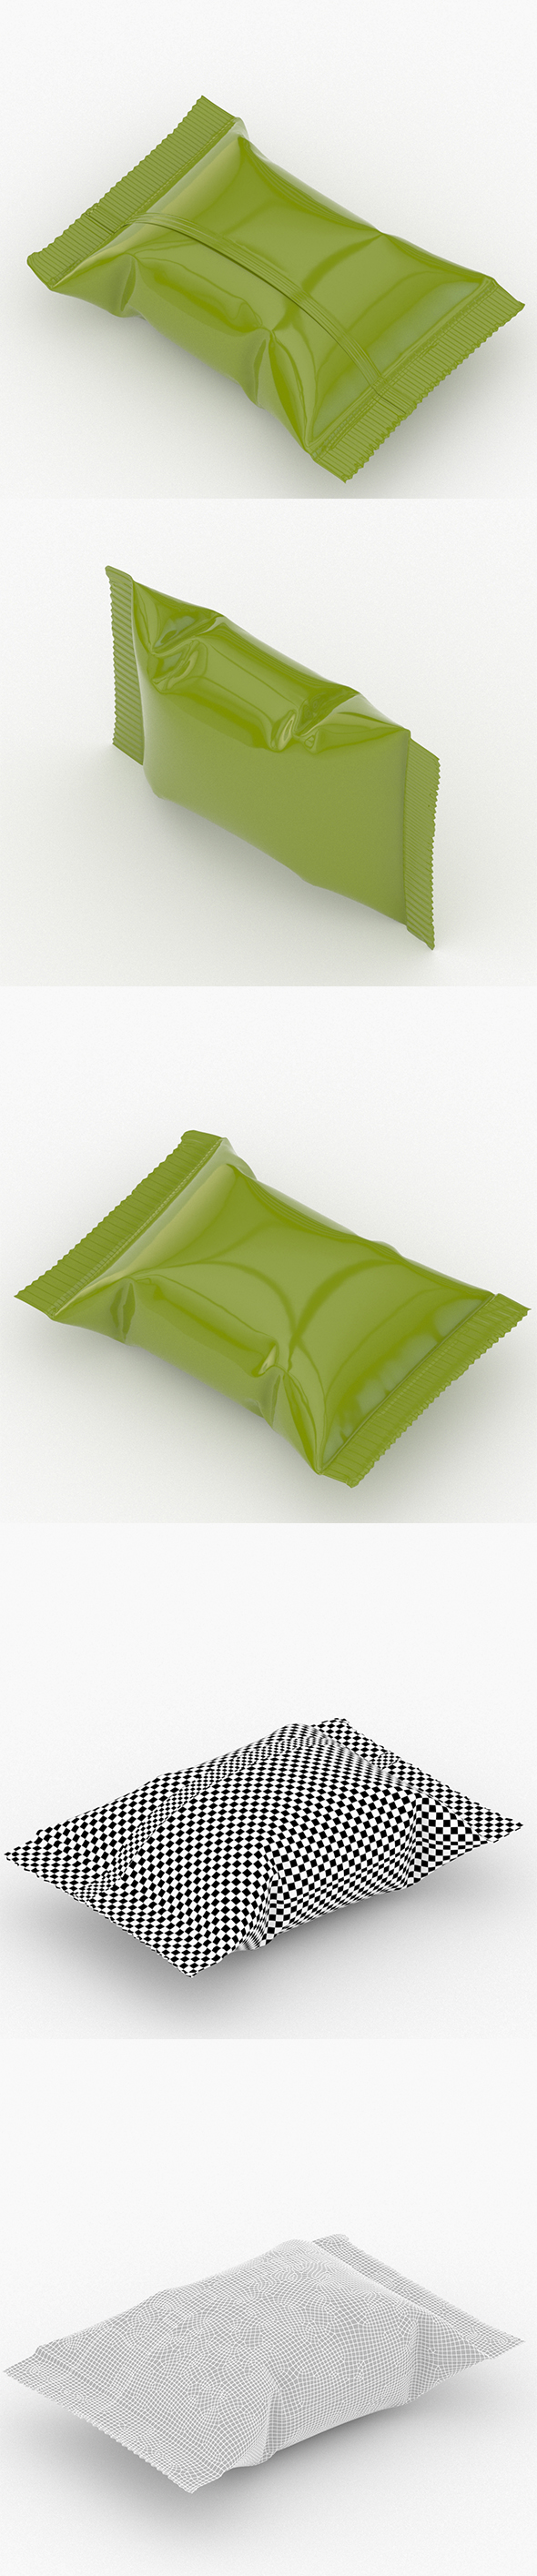 Candy wrapper v4 - 3Docean 22657806